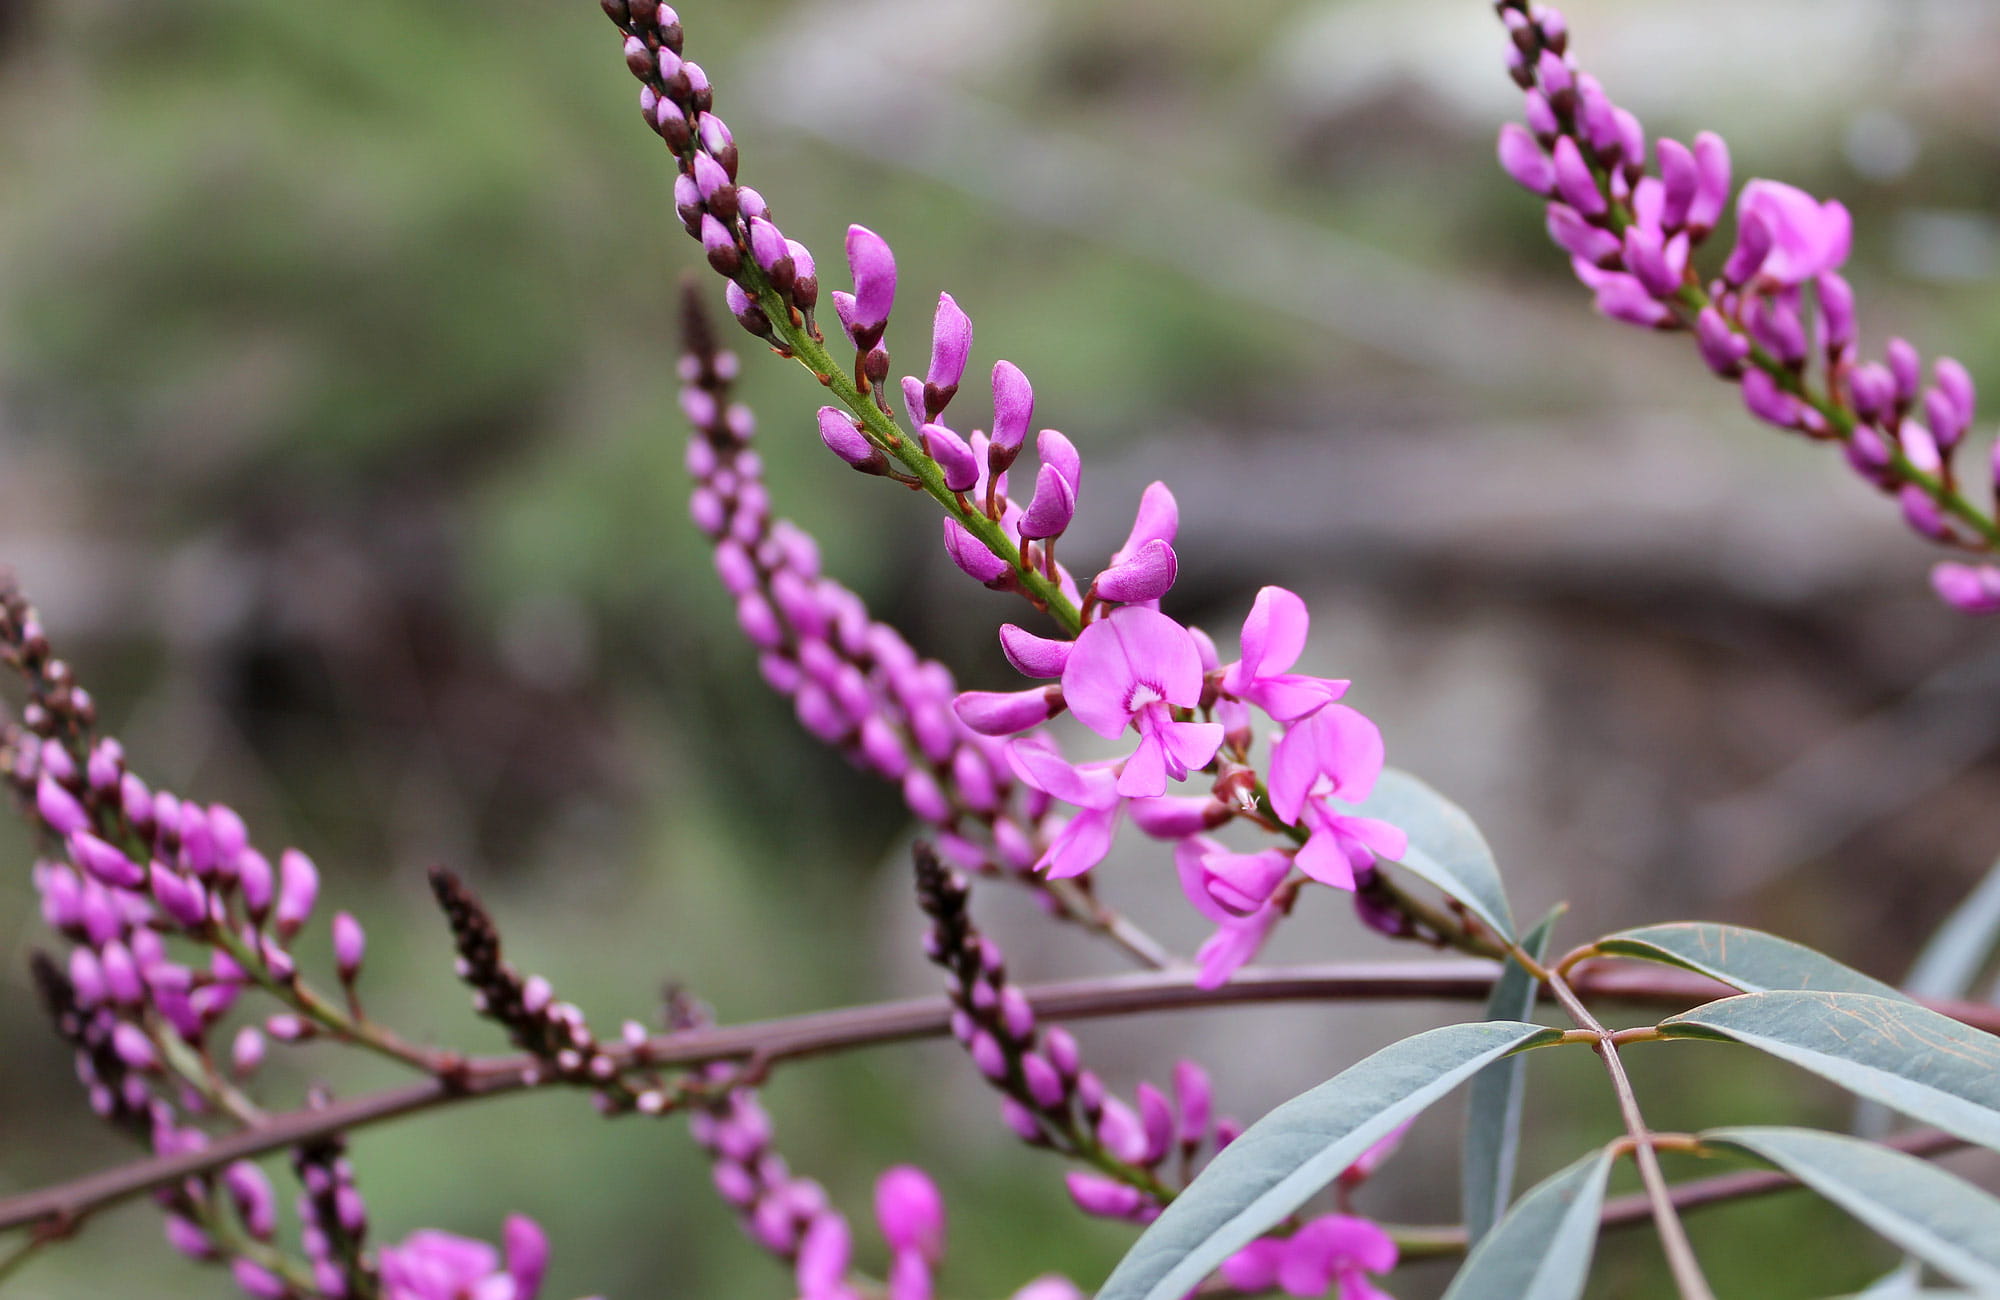 Basin Gully Wildflowers, Weddin Mountains National Park. Photo: C Davis/NSW Government